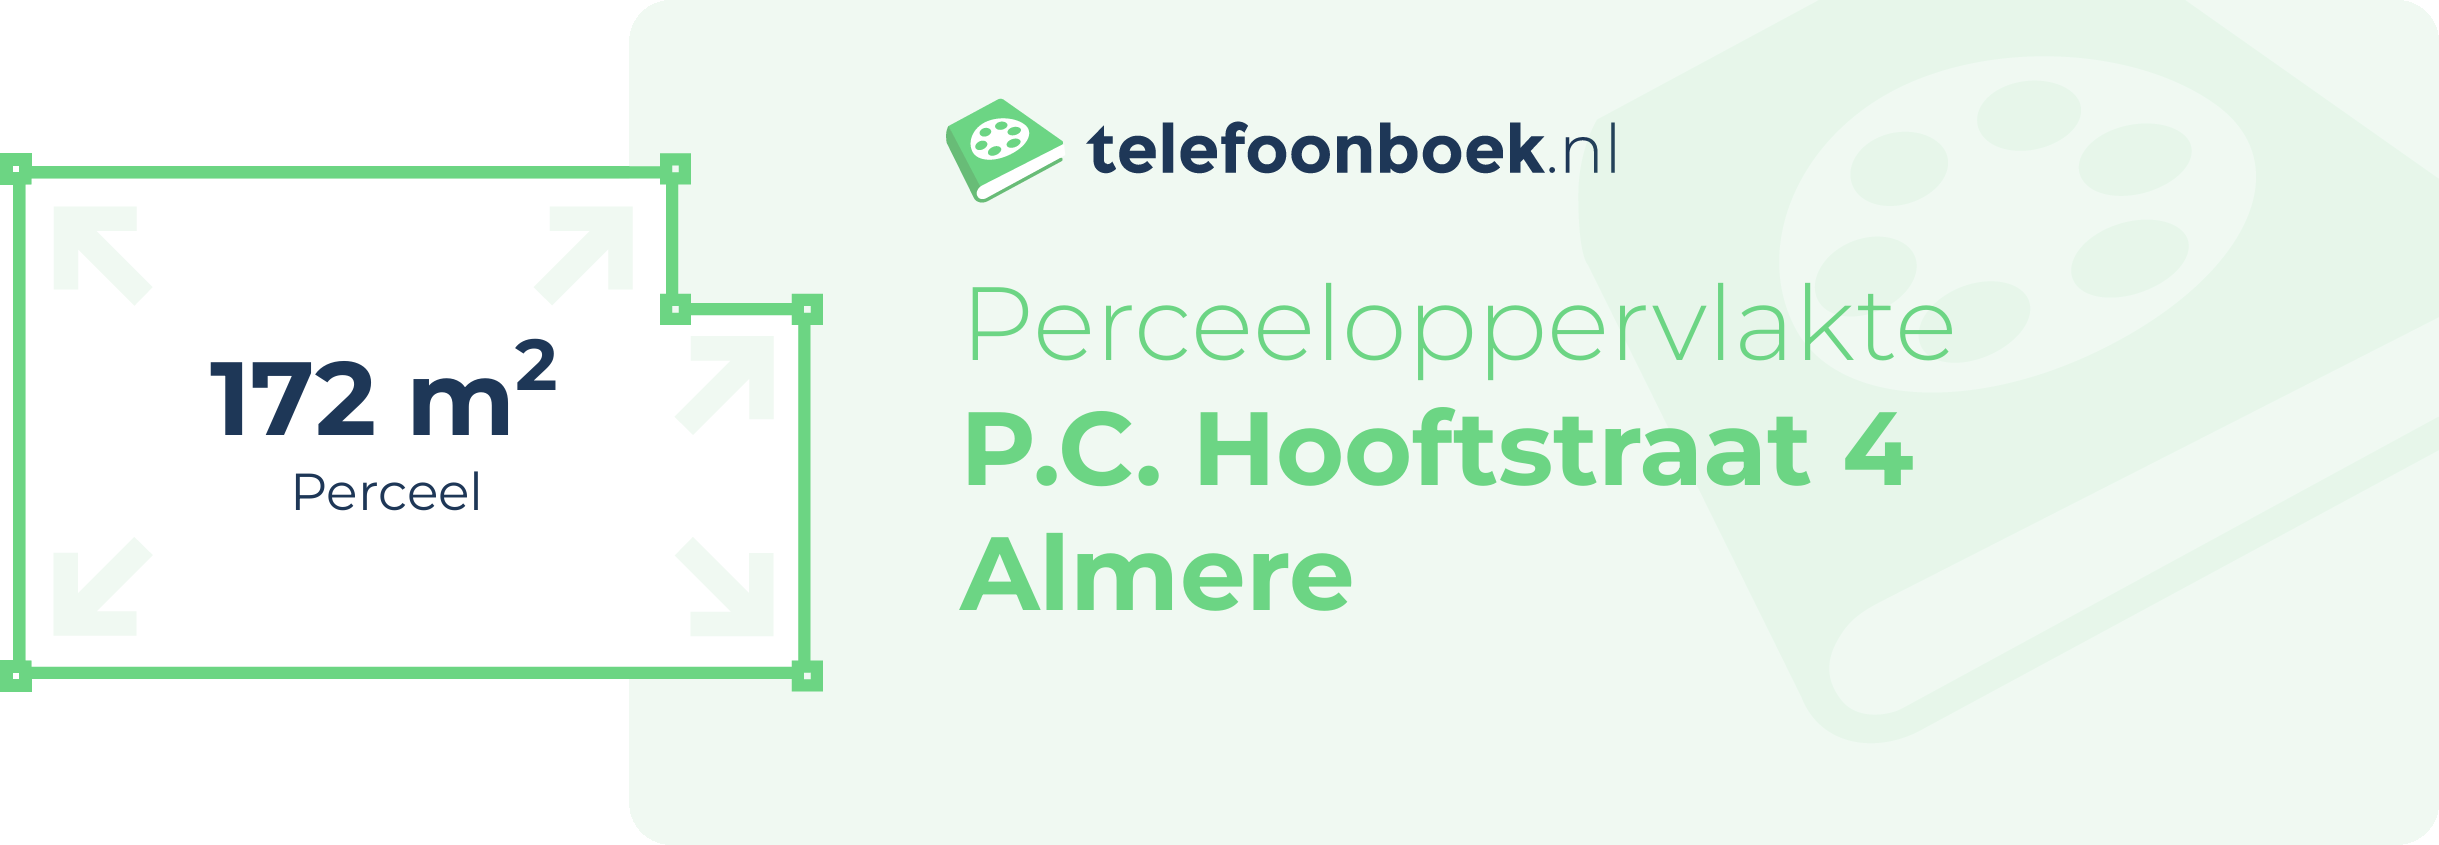 Perceeloppervlakte P.C. Hooftstraat 4 Almere